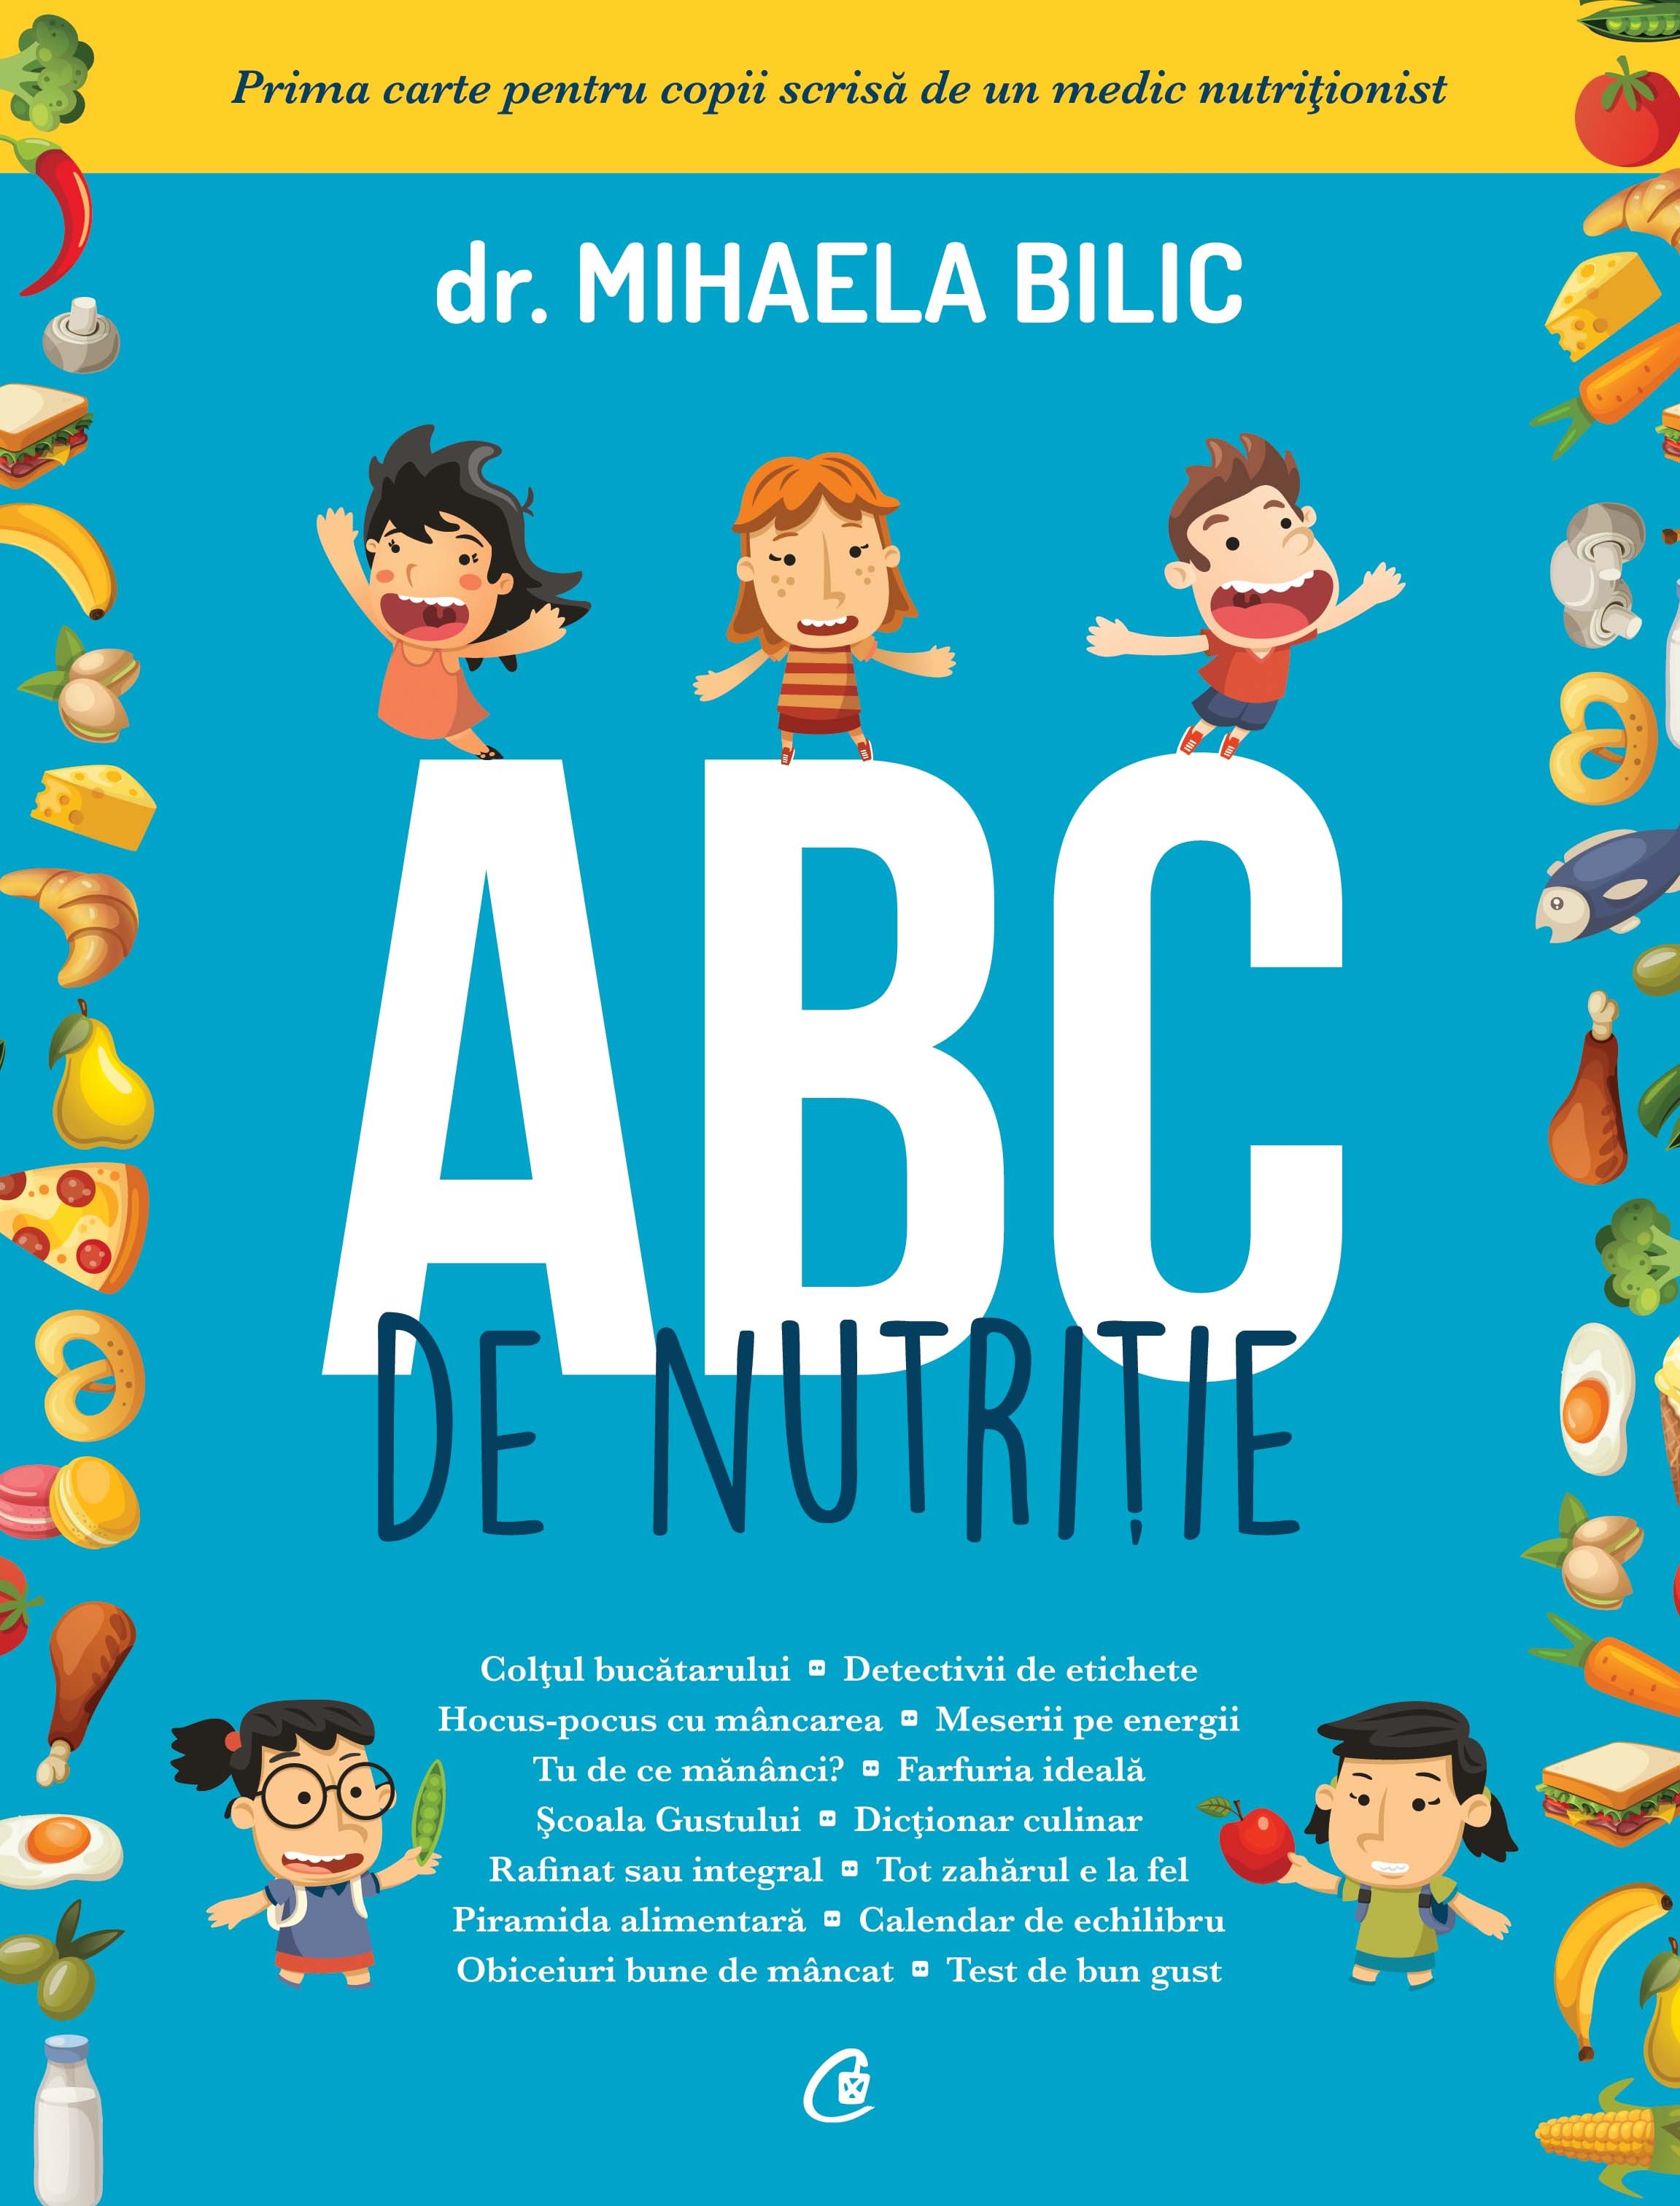 ABC de nutritie | Dr. Mihaela Bilic carturesti.ro poza bestsellers.ro